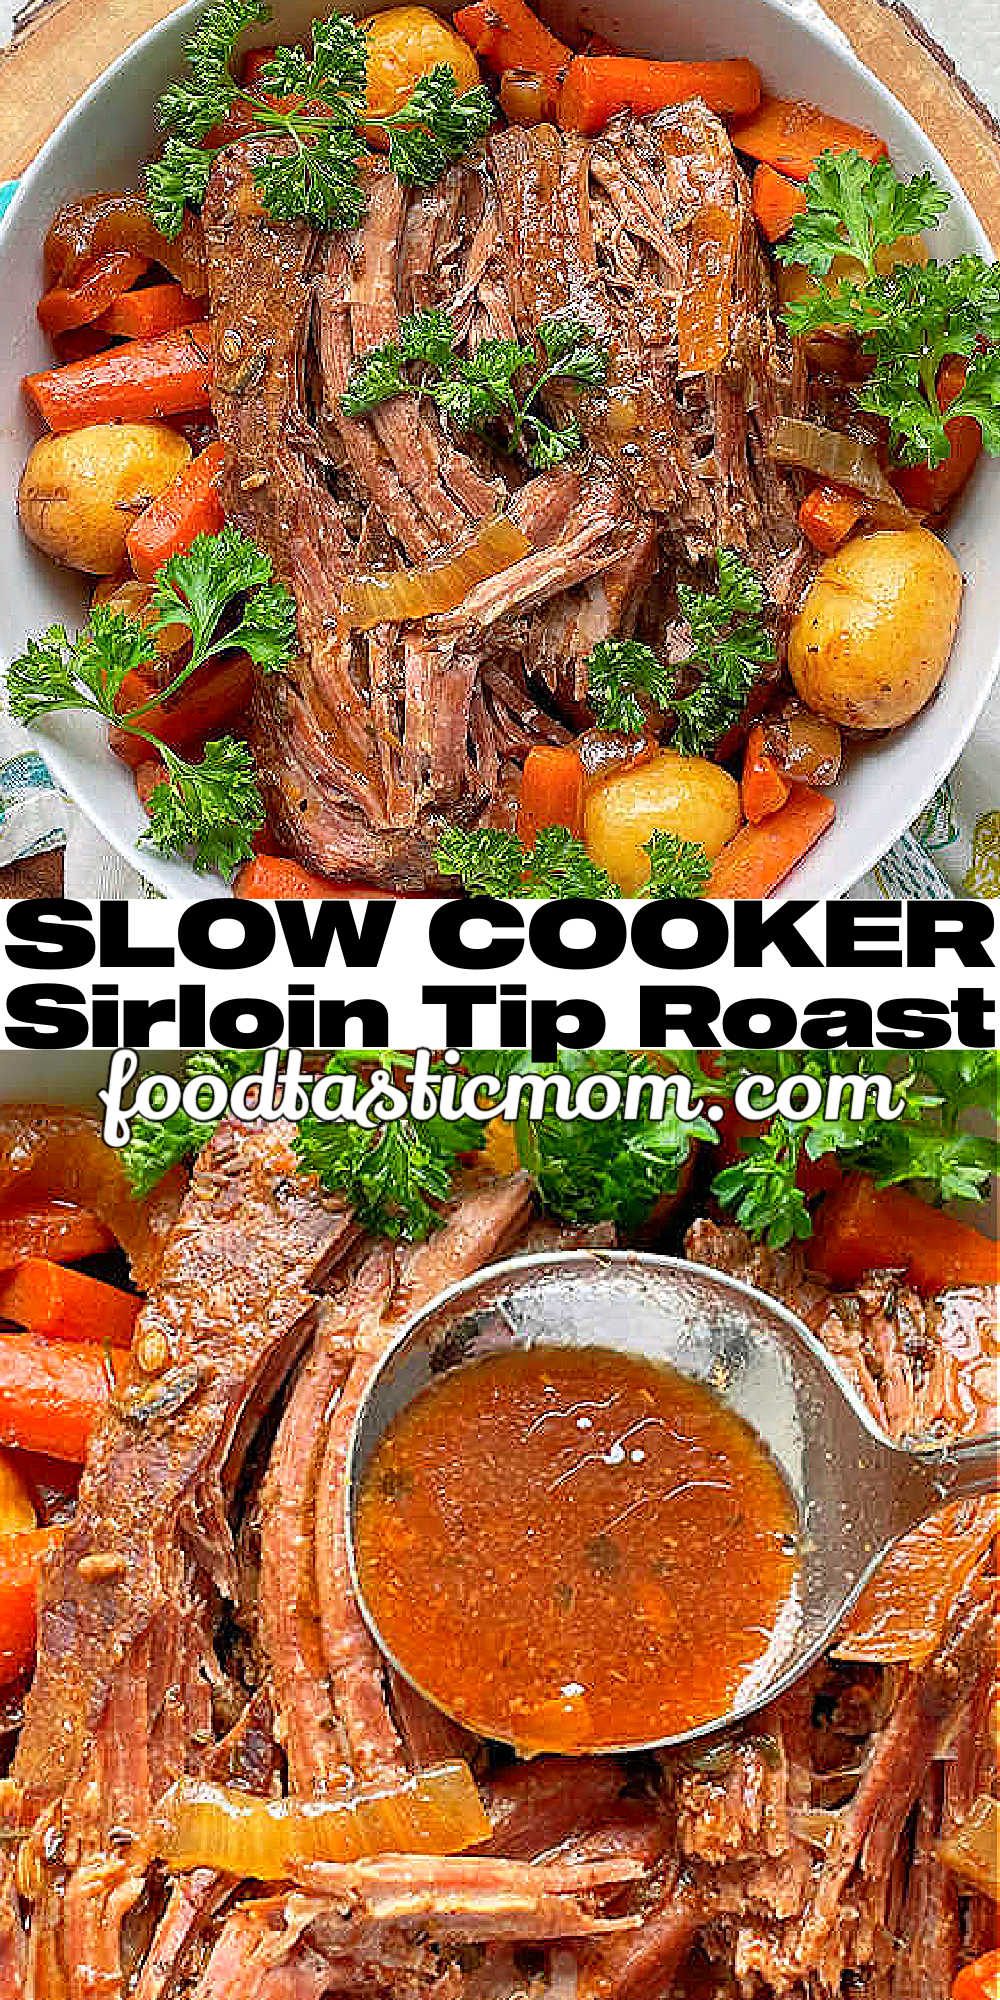 Slow Cooker Sirloin Tip Roast | Foodtastic Mom #slowcookerrecipes #sirlointiproast #potroast #beefstew via @foodtasticmom